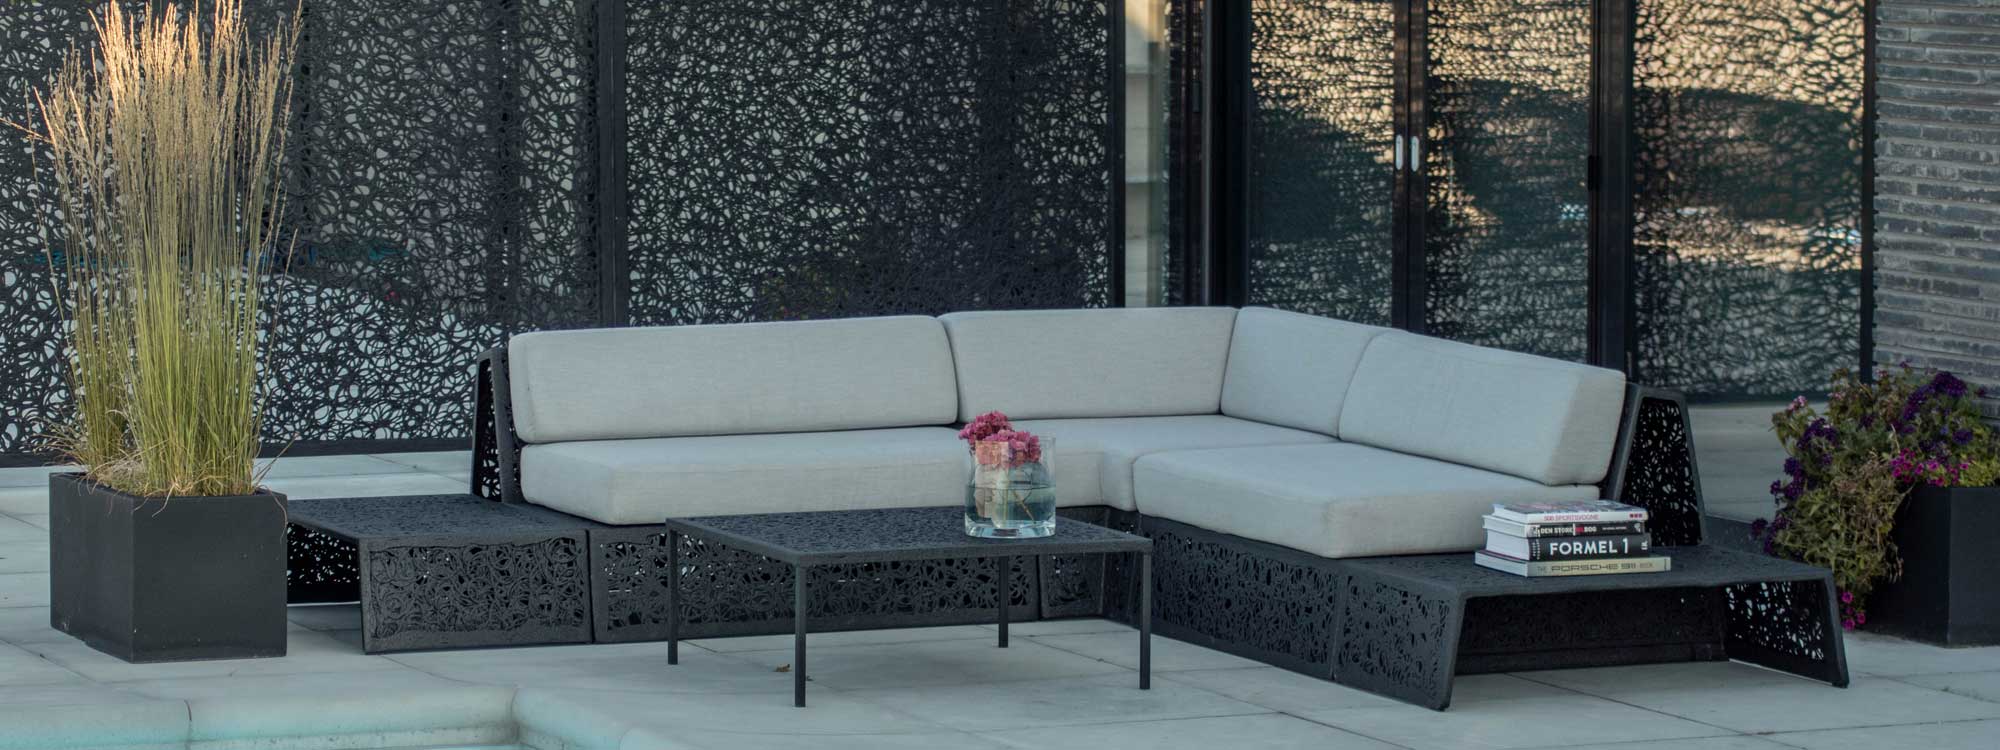 Bios Lounge outdoor corner sofa & modern garden sofa is a unique ready to ship modular garden lounge set in basalt by Unknown lava furniture.